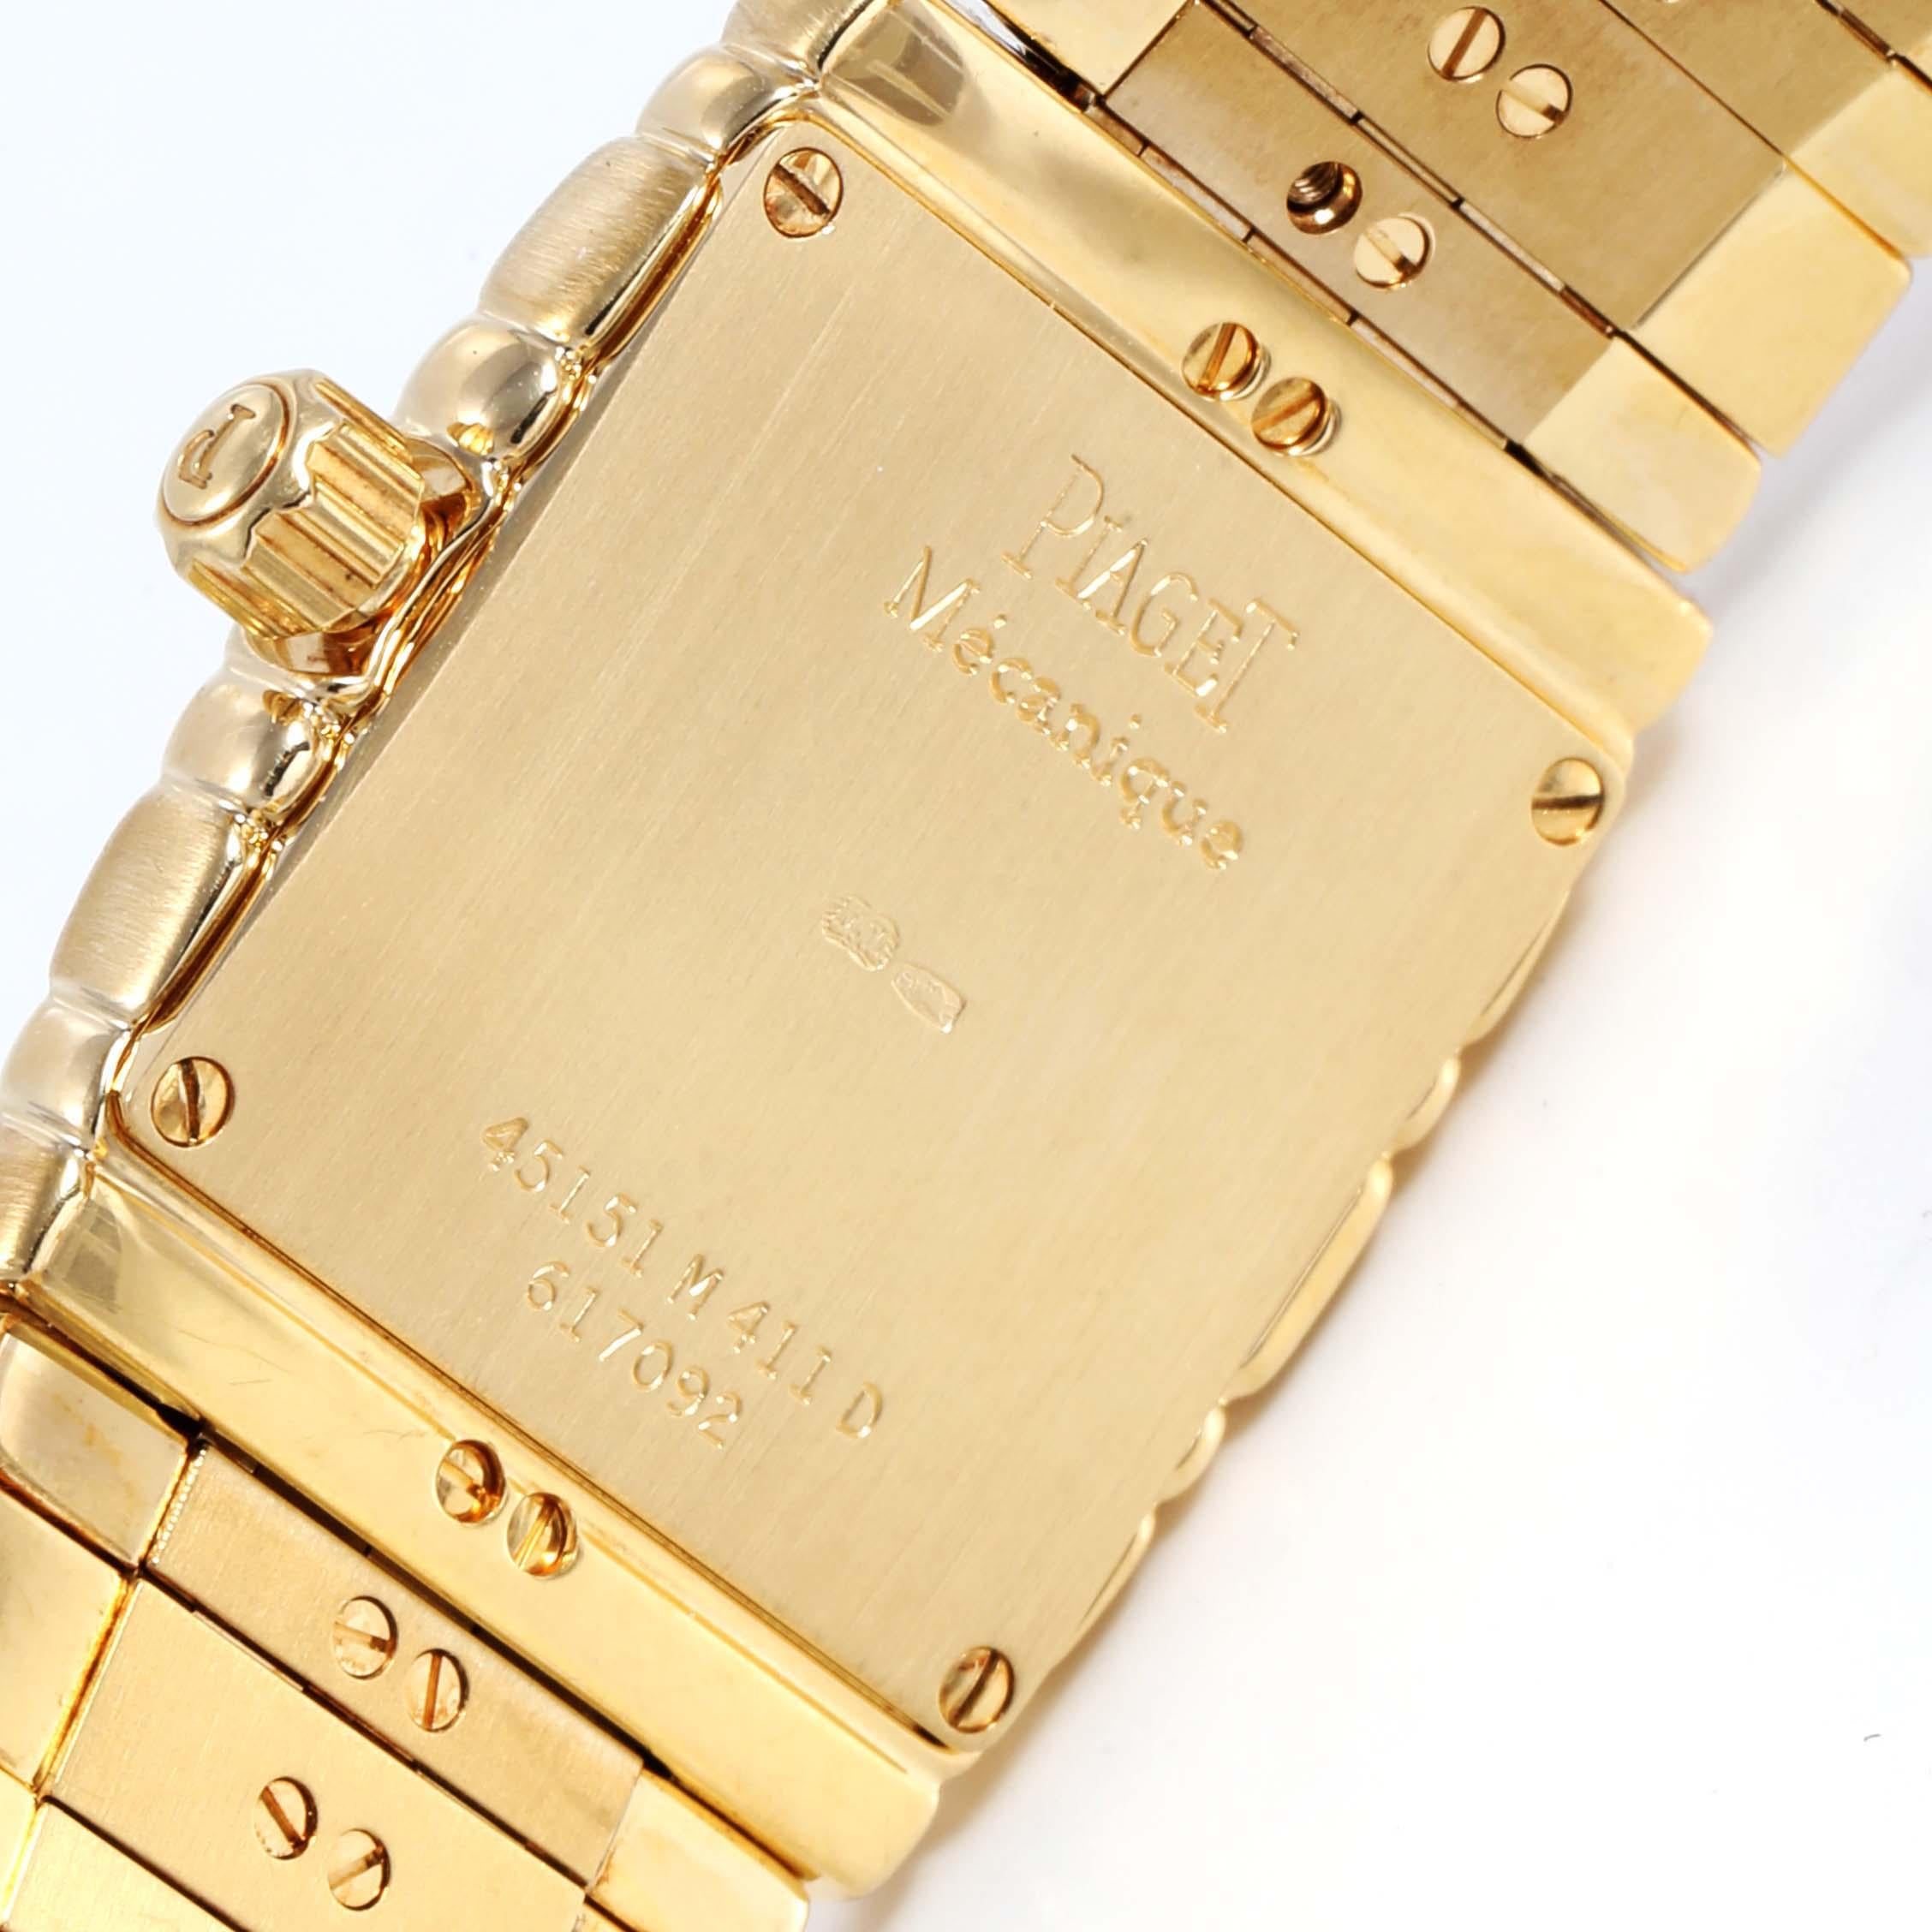 Piaget Tanagra 18 Karat Yellow Gold Mechanical Ladies Watch M411 For Sale 3